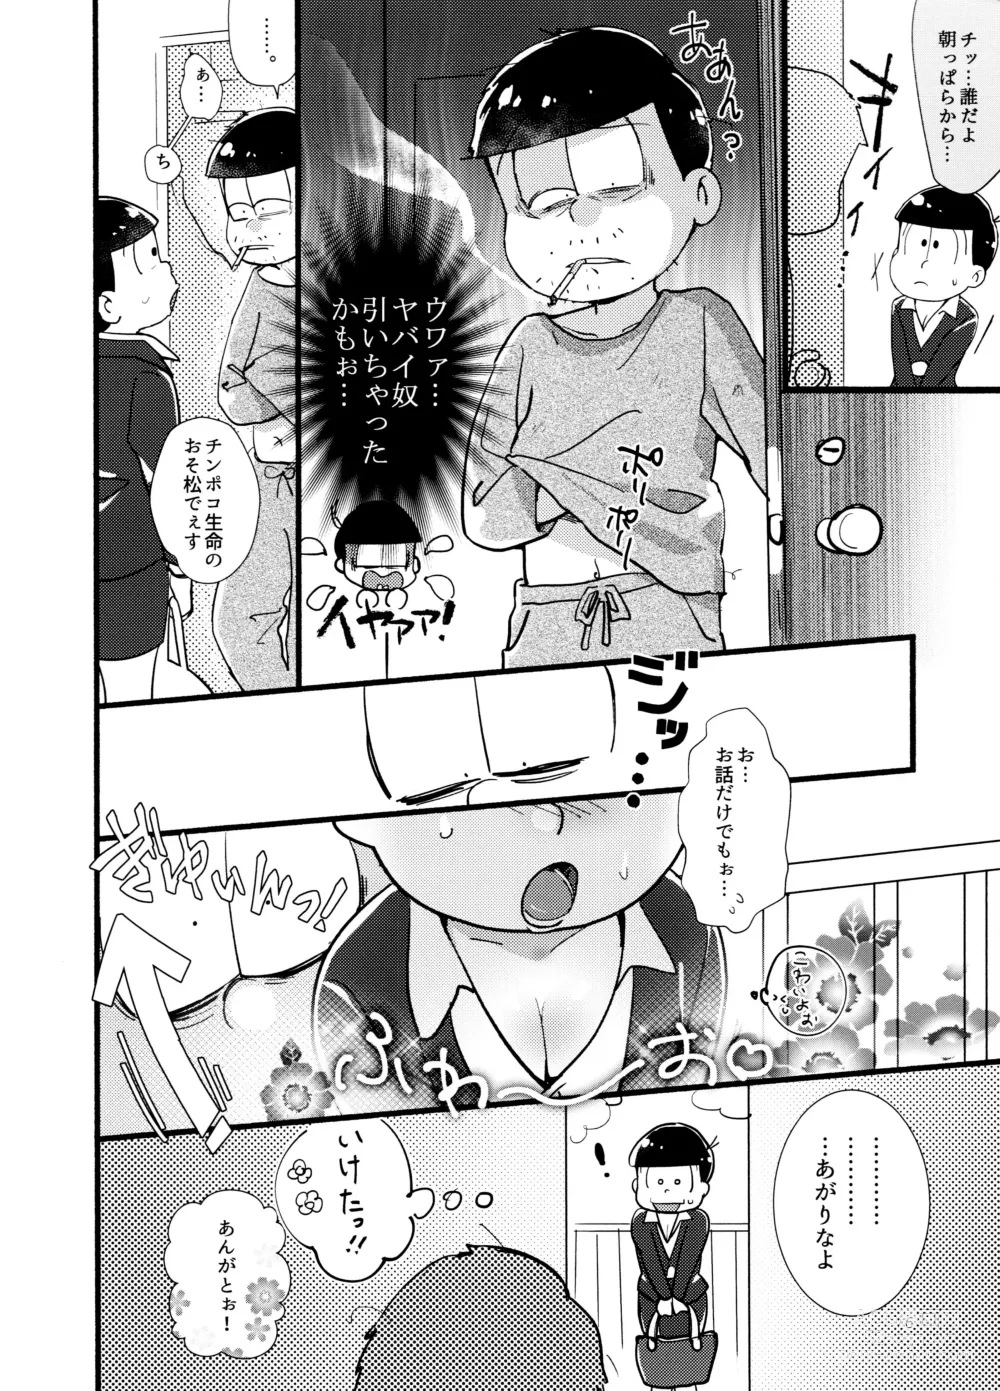 Page 6 of doujinshi Momare Keiyaku